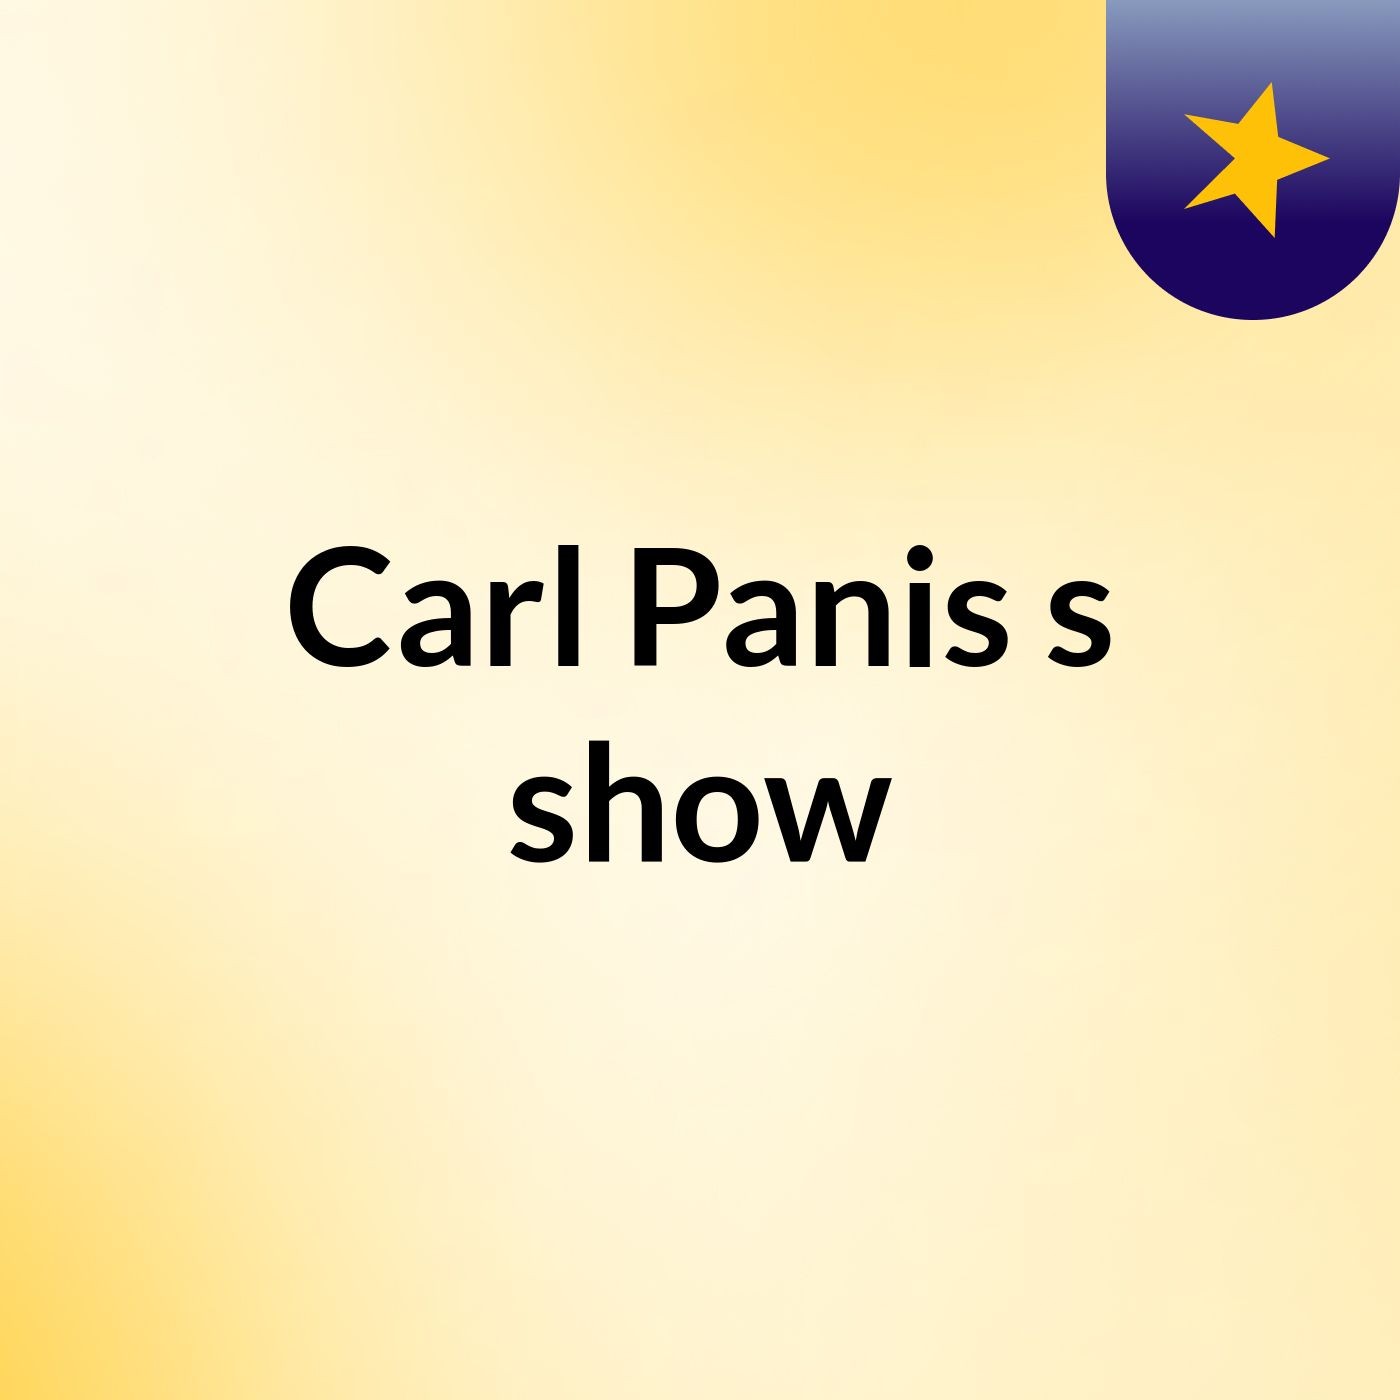 Carl Panis's show